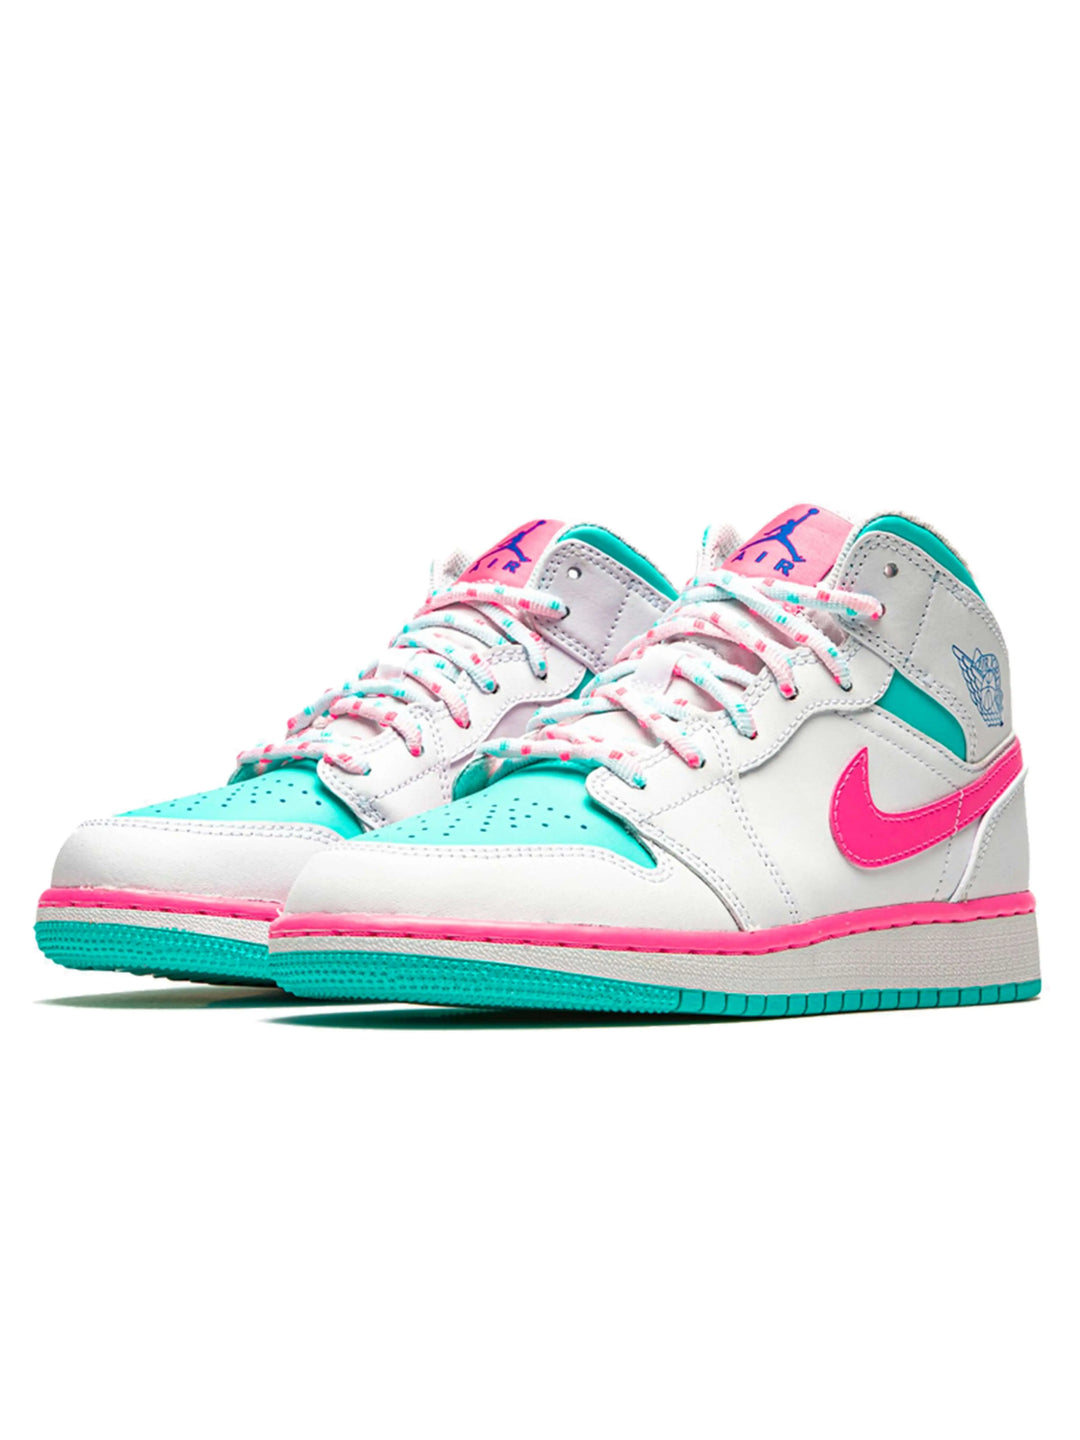 Nike Air Jordan 1 Mid White Pink Green Soar (GS) Jordan Brand